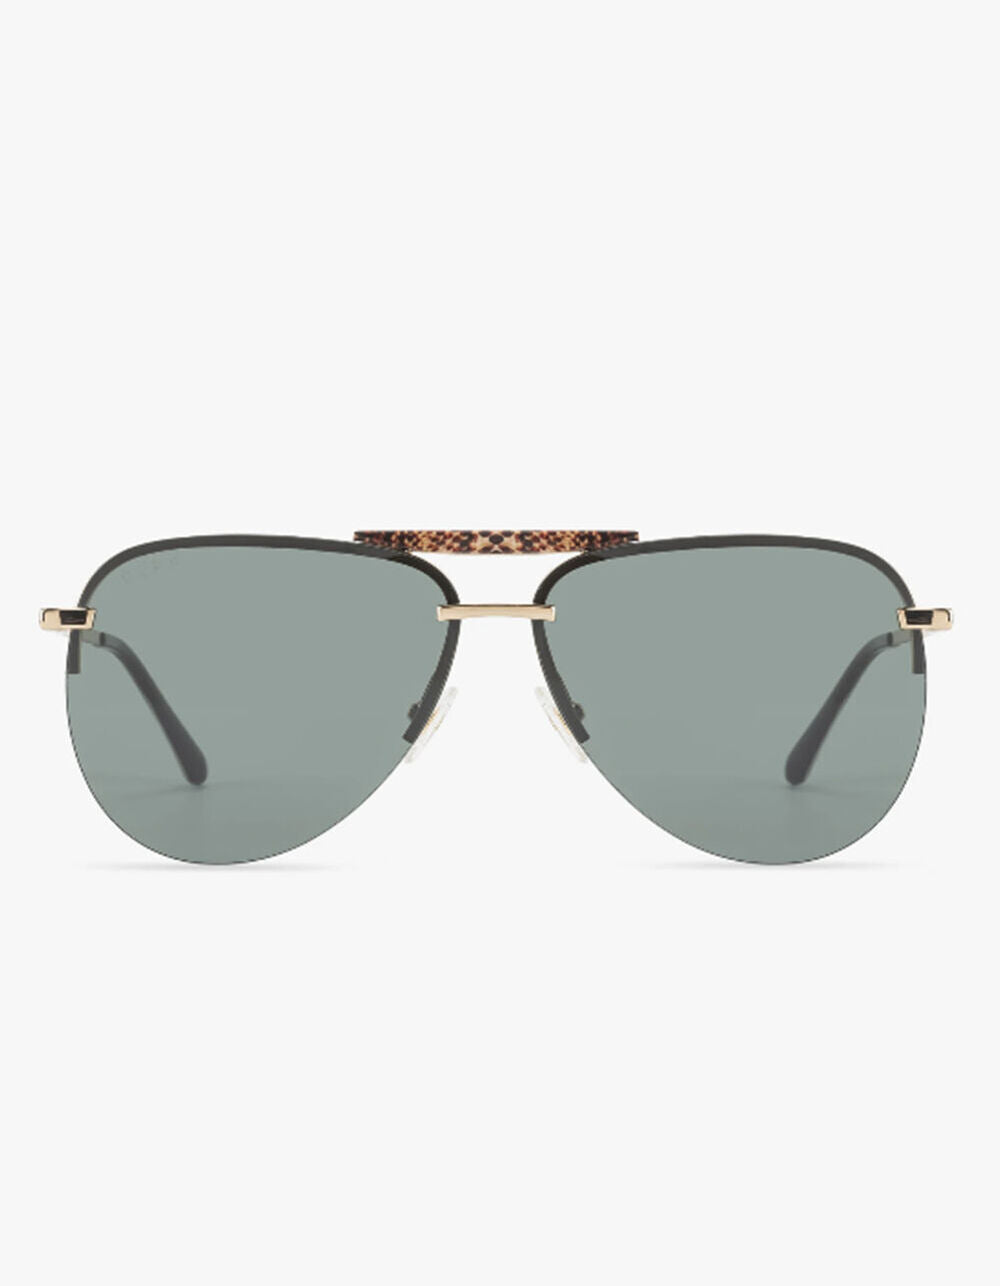 DIFF Tahoe Gold G15 Flash Polarized  Sunglasses